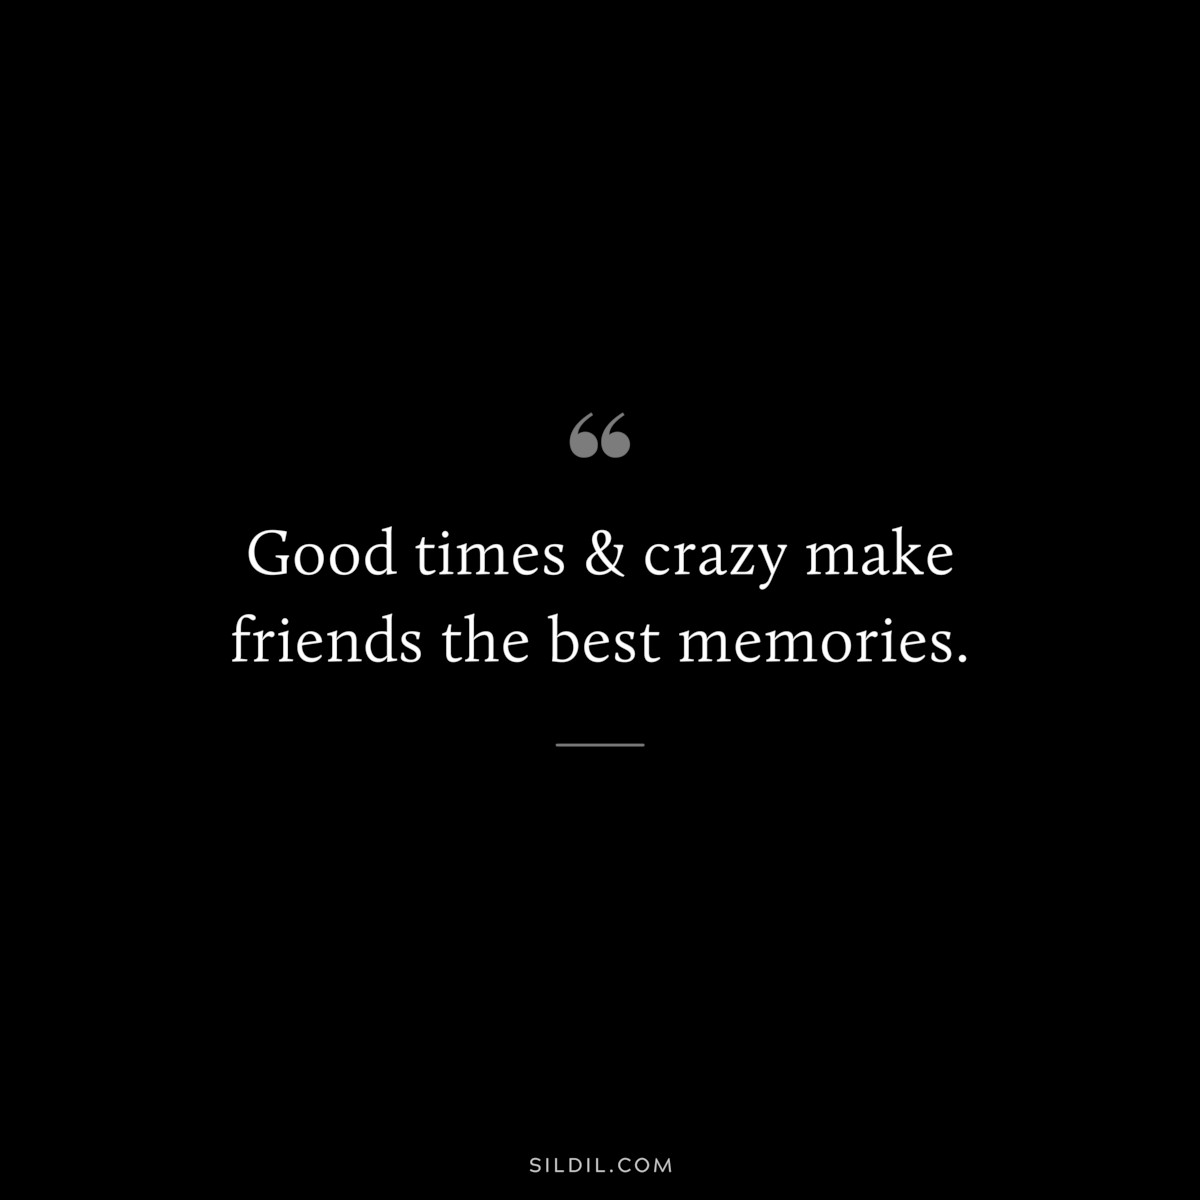 Good times & crazy make friends the best memories.